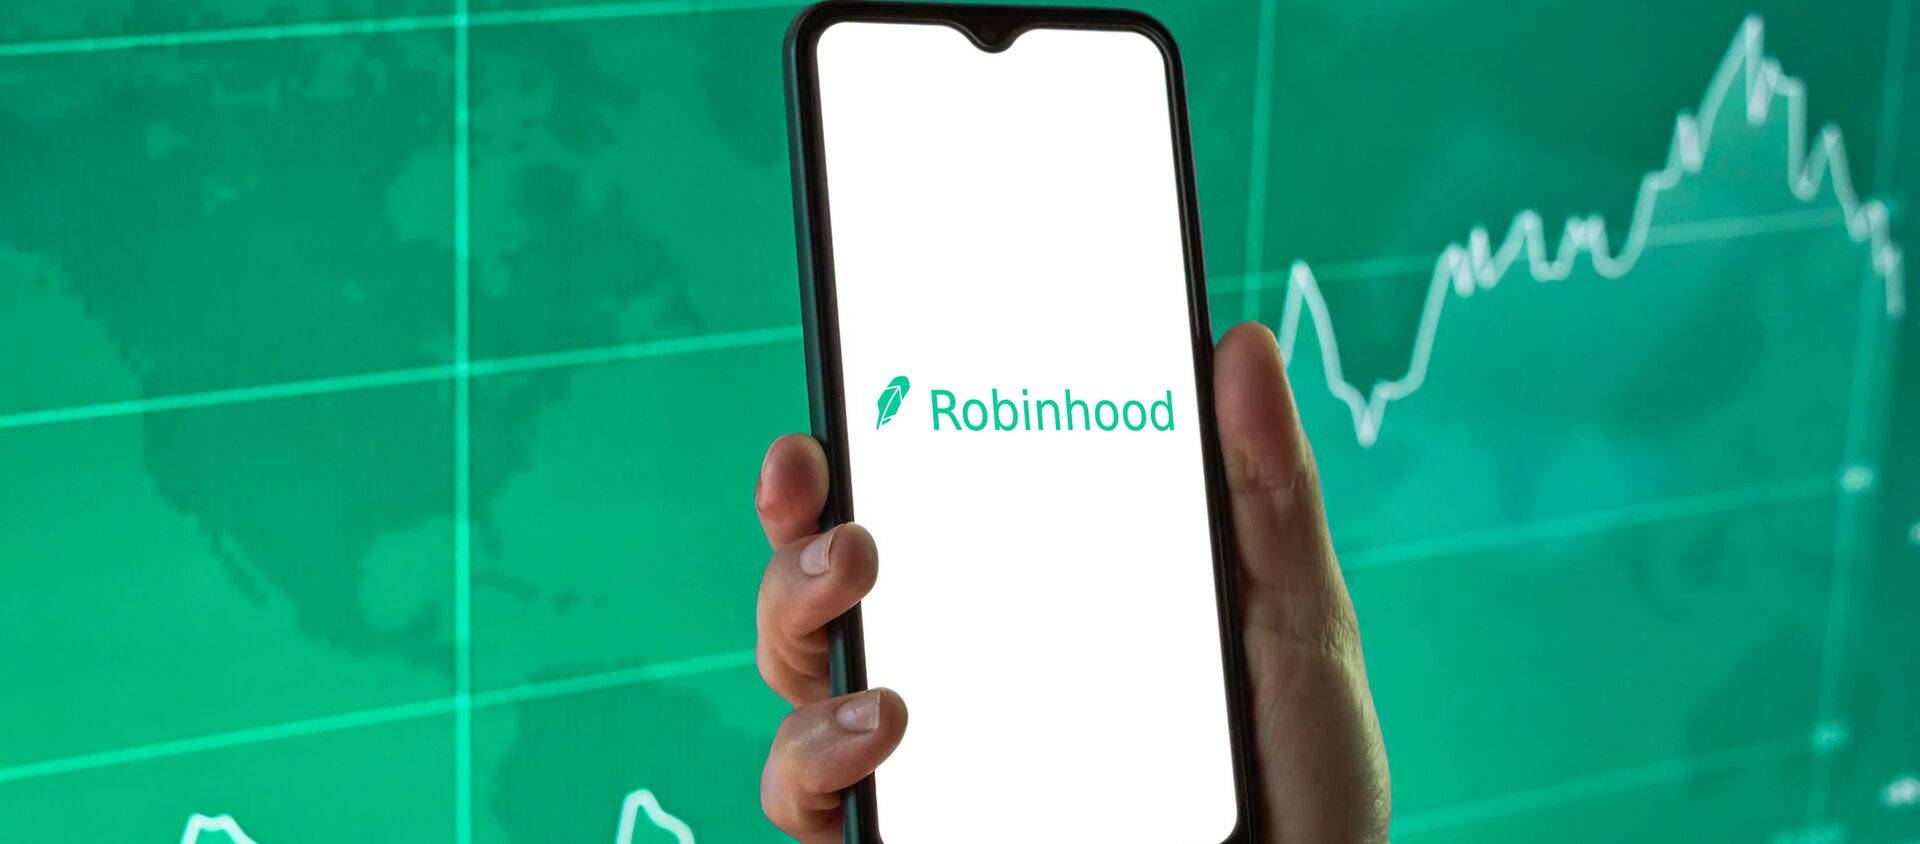 Robinhood financial investing app on a mobile device - Sputnik International, 1920, 24.03.2021